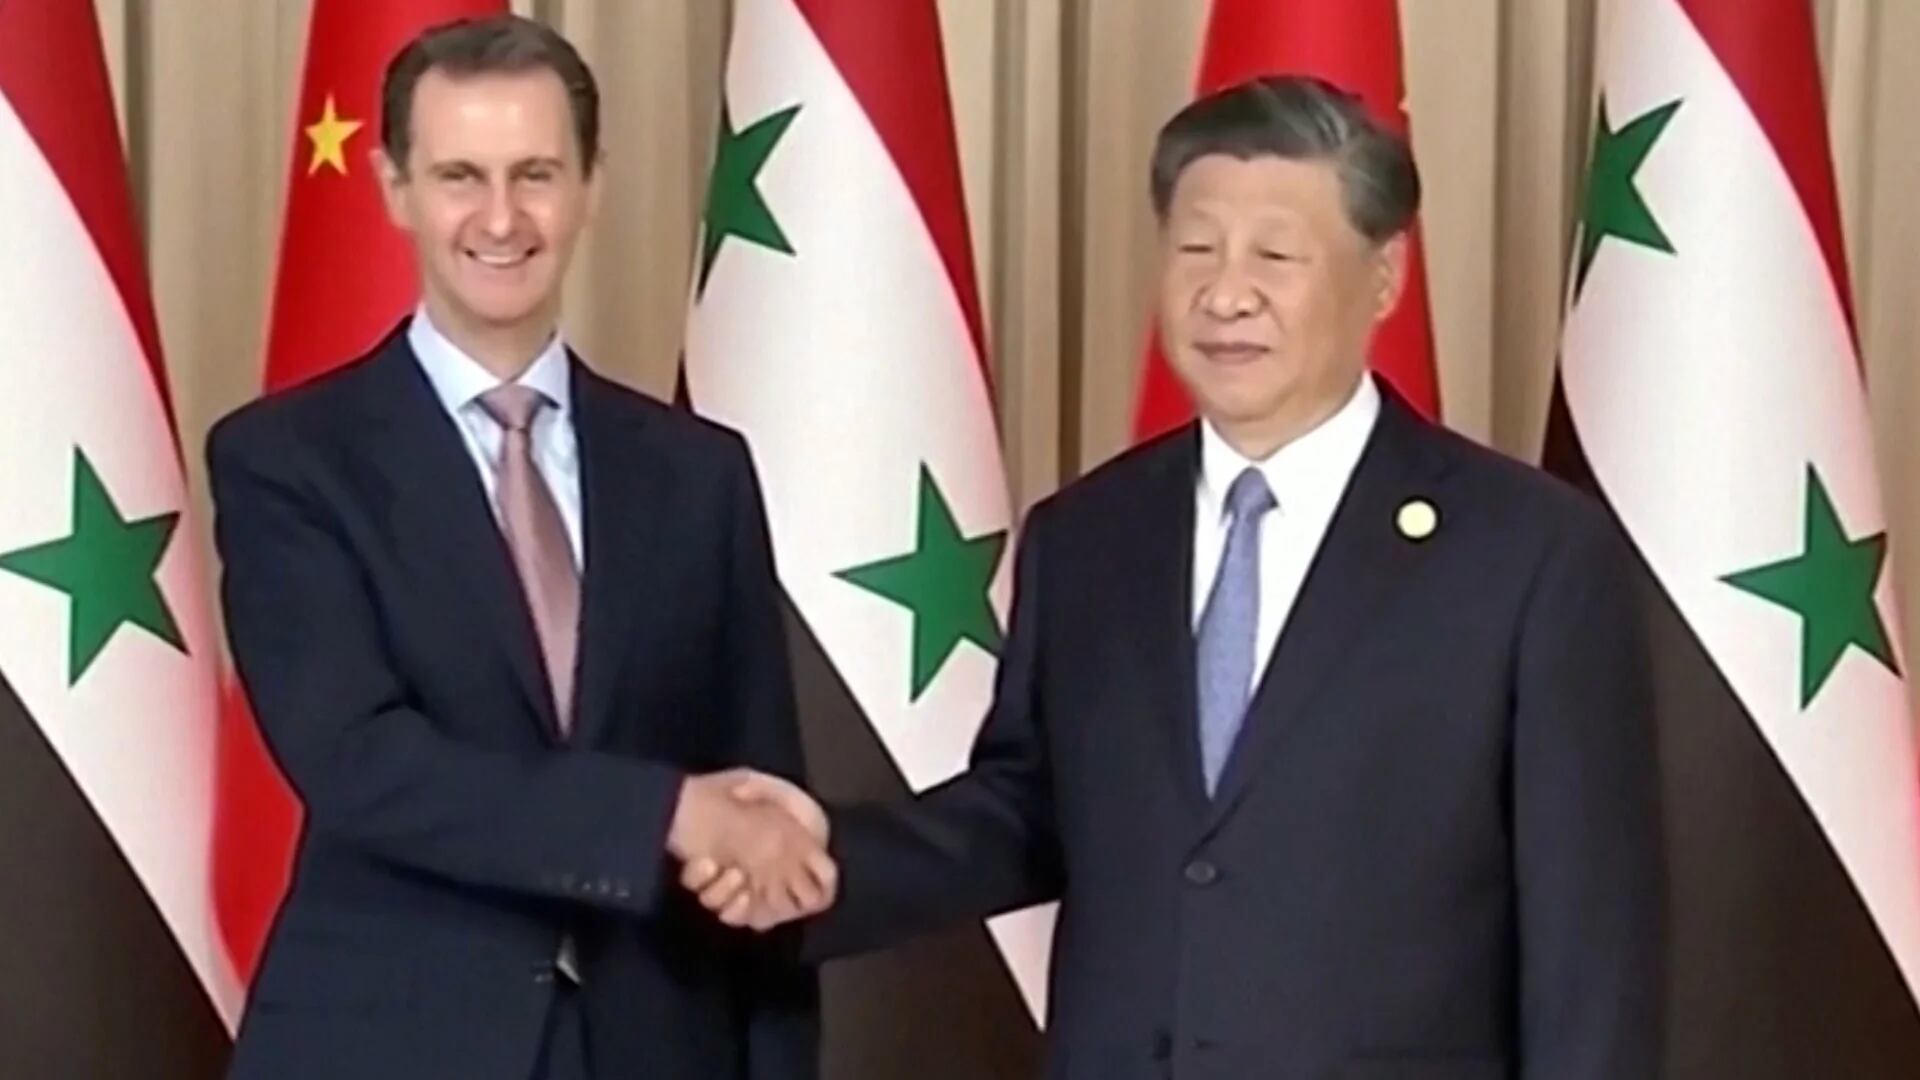 Xi Jinping recibió al dictador Bashar al Assad: “La asociación estratégica China-Siria será un hito en la historia”